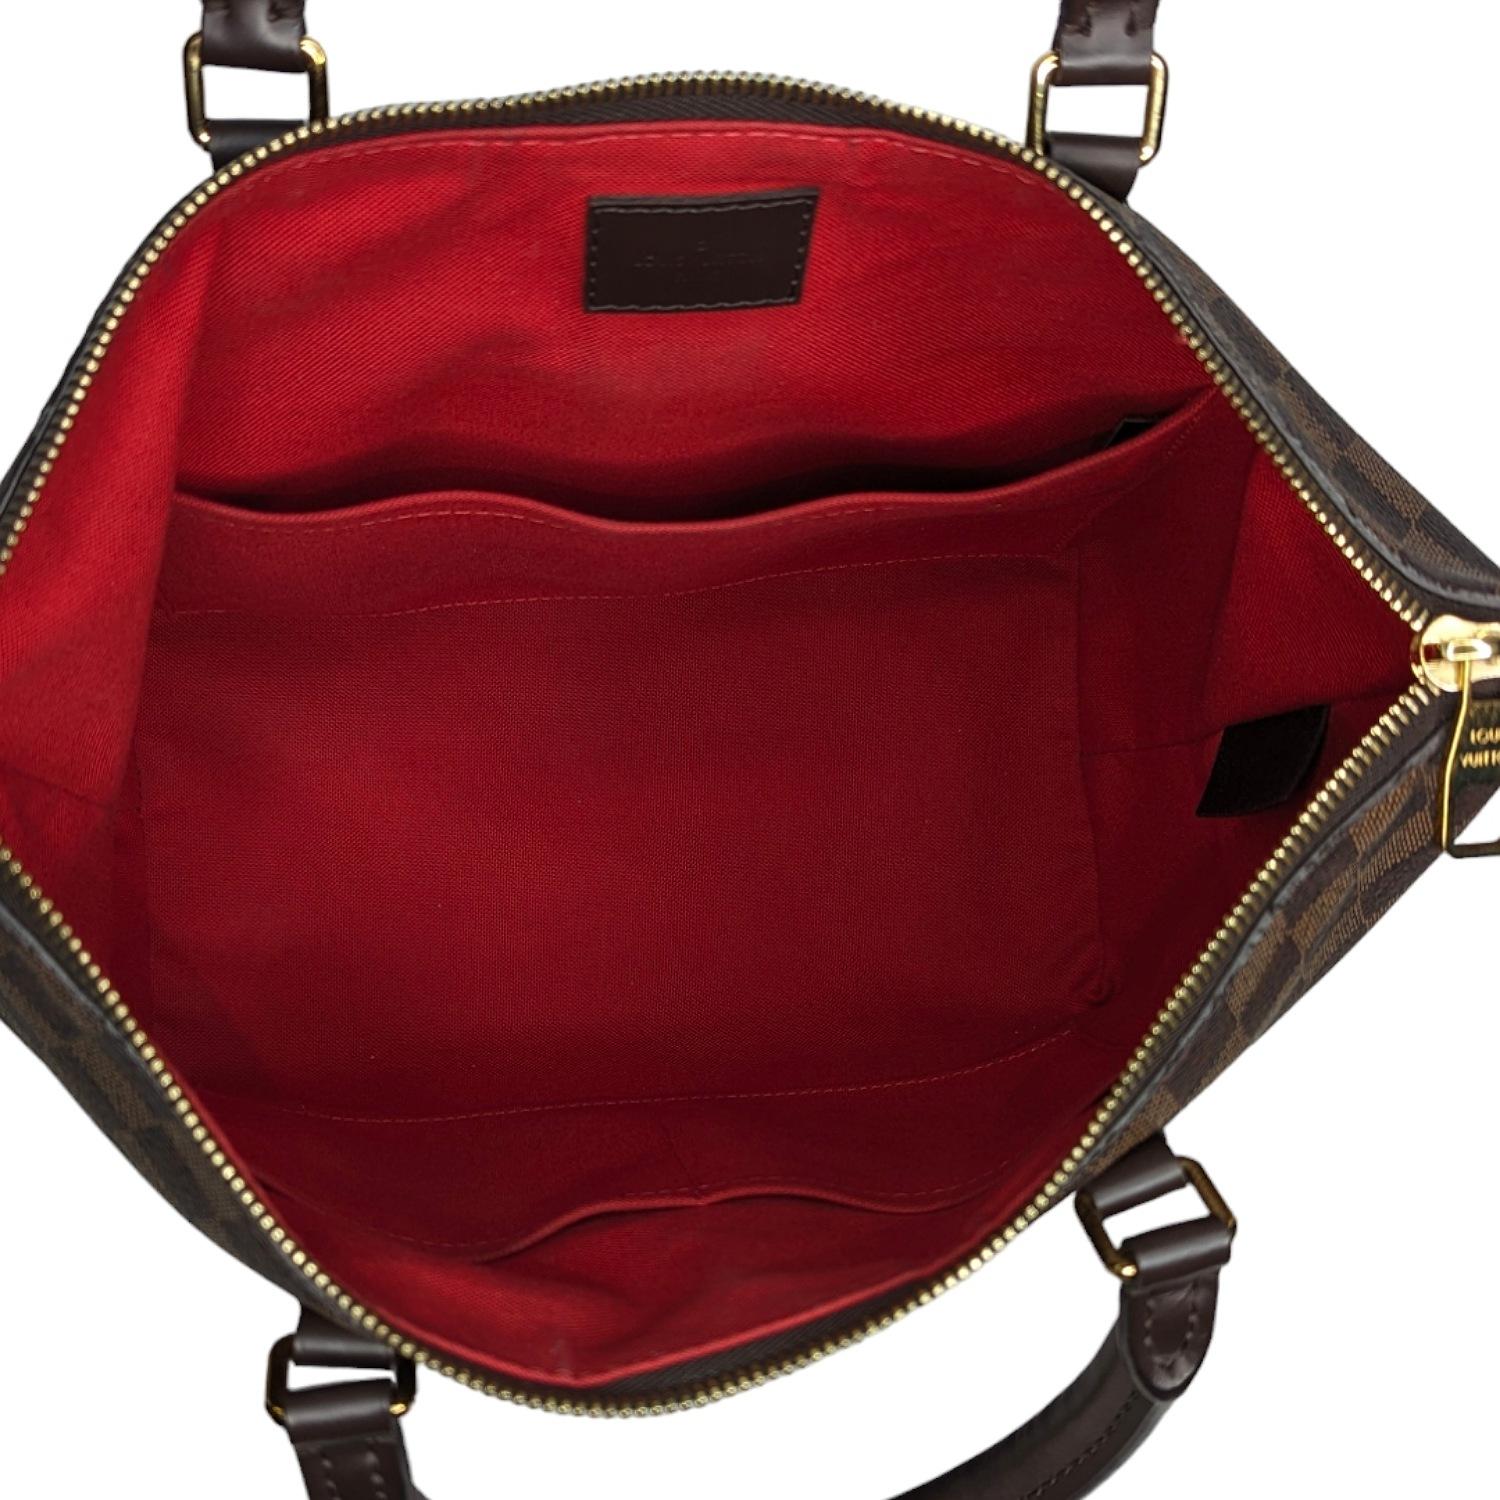 Louis Vuitton Damier Ebene Siena PM Bag In Excellent Condition For Sale In Scottsdale, AZ